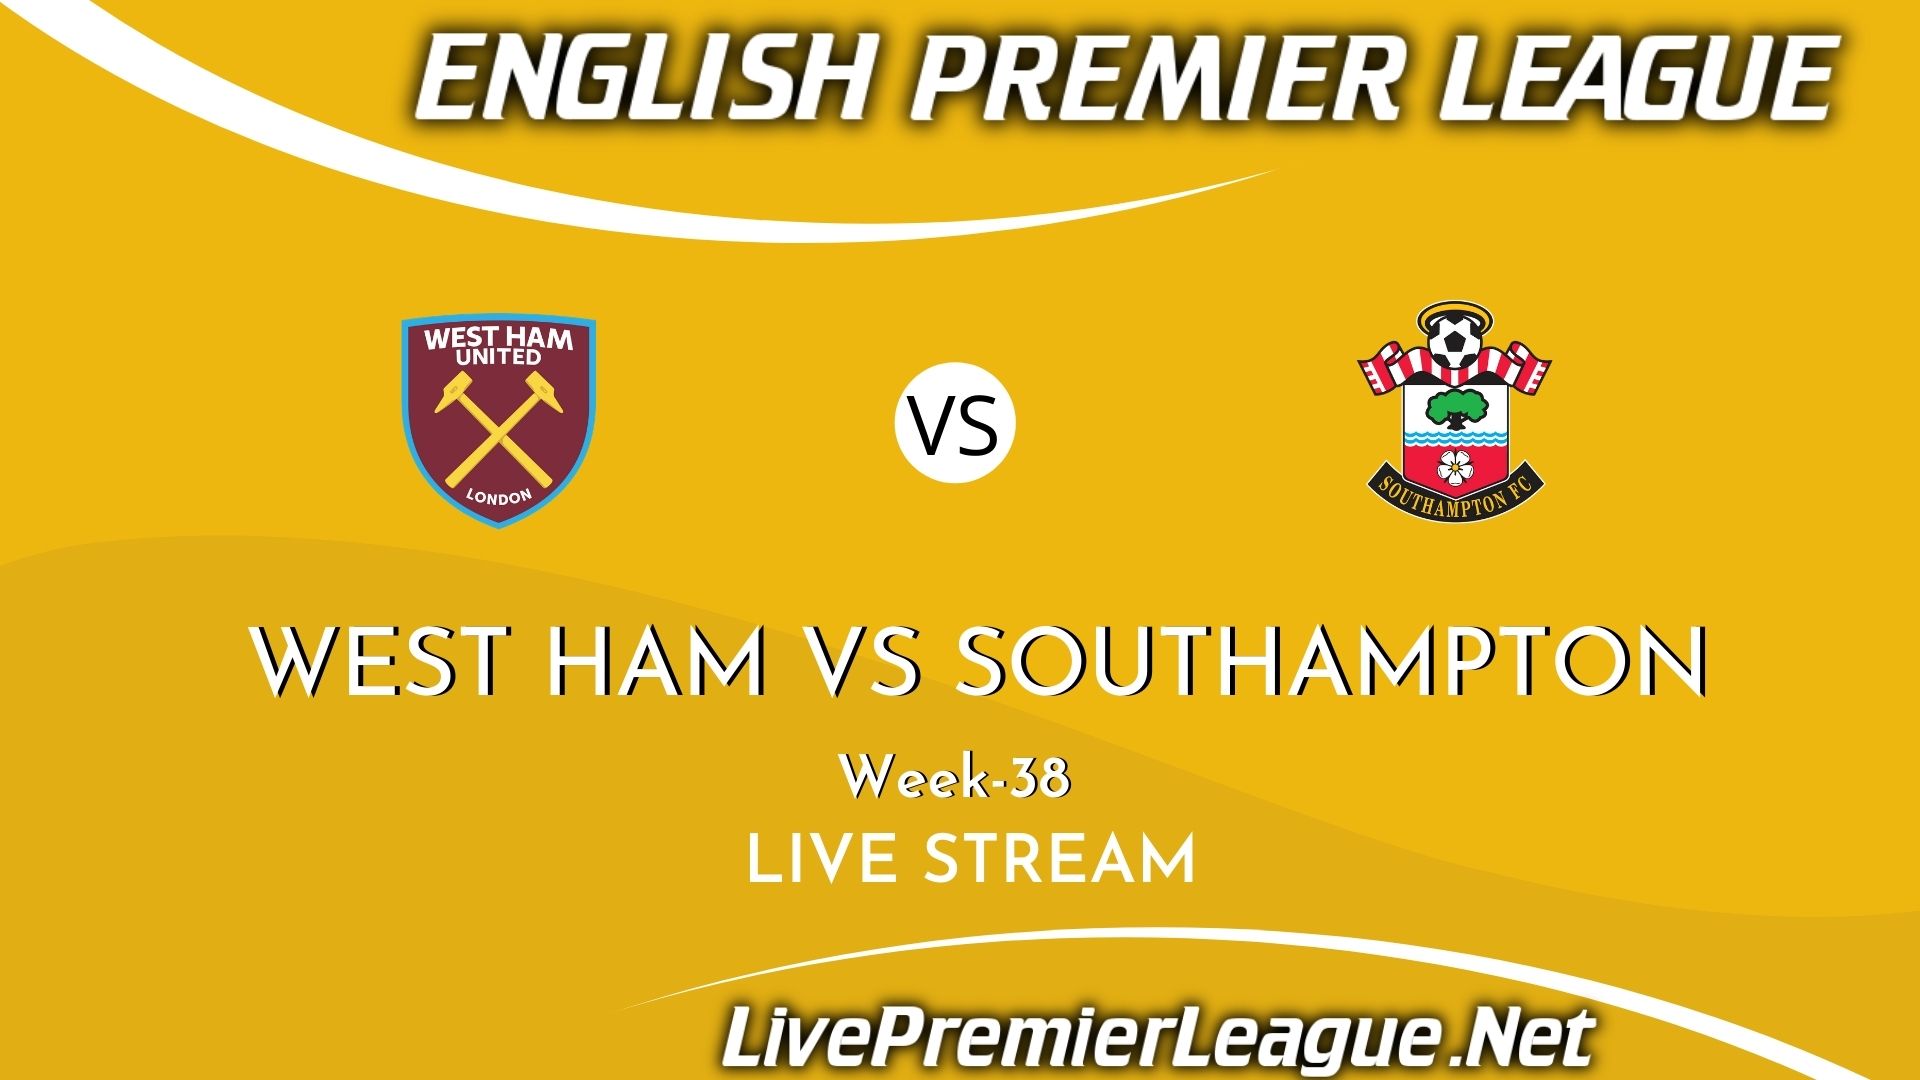 West Ham United Vs Southampton Live Stream 2021 | Premier League Week 38